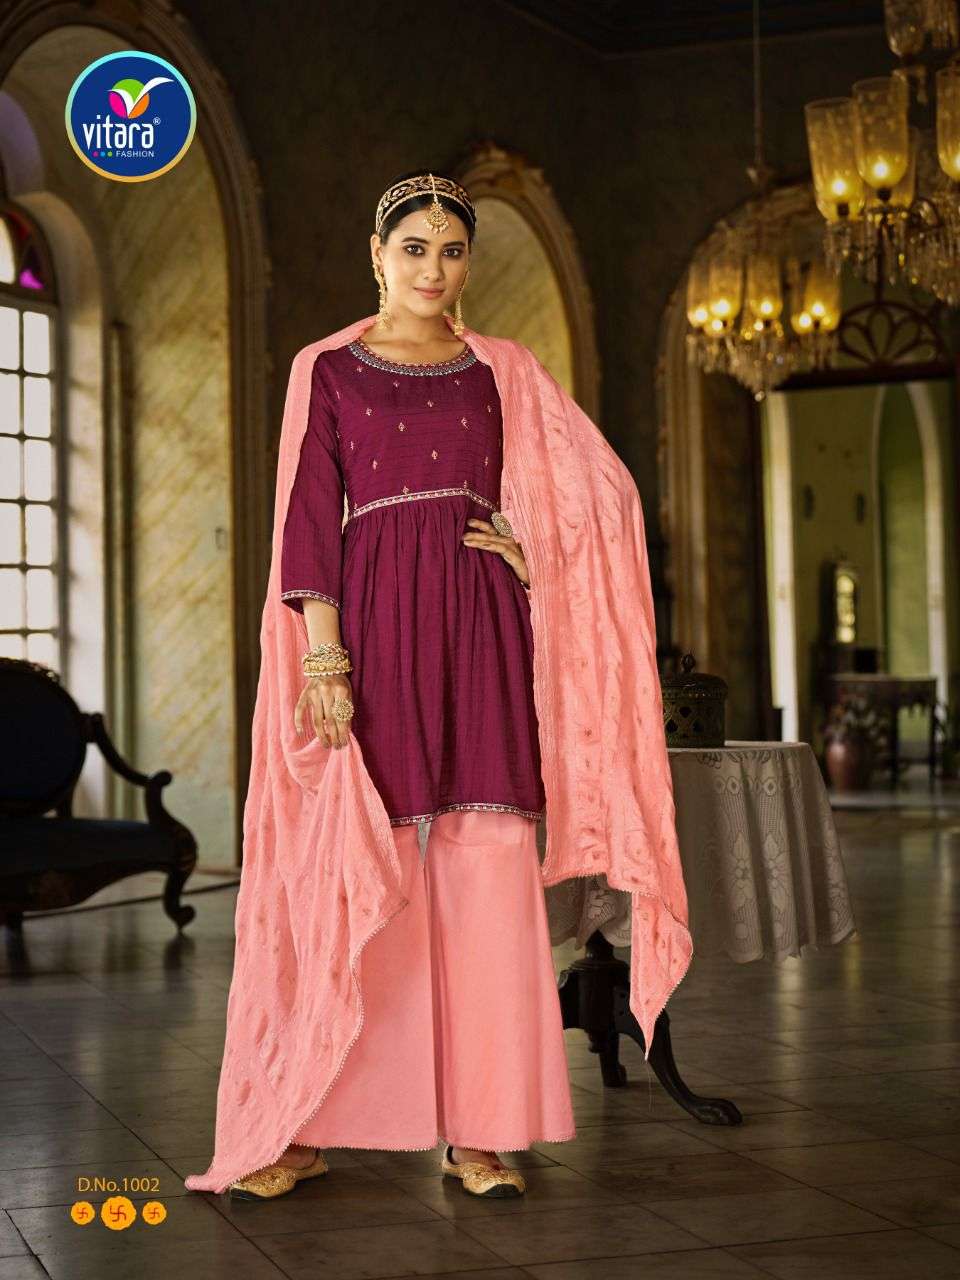 vitara prime rose 1001-1004 series exclusive stich salwar suits online dealer surat